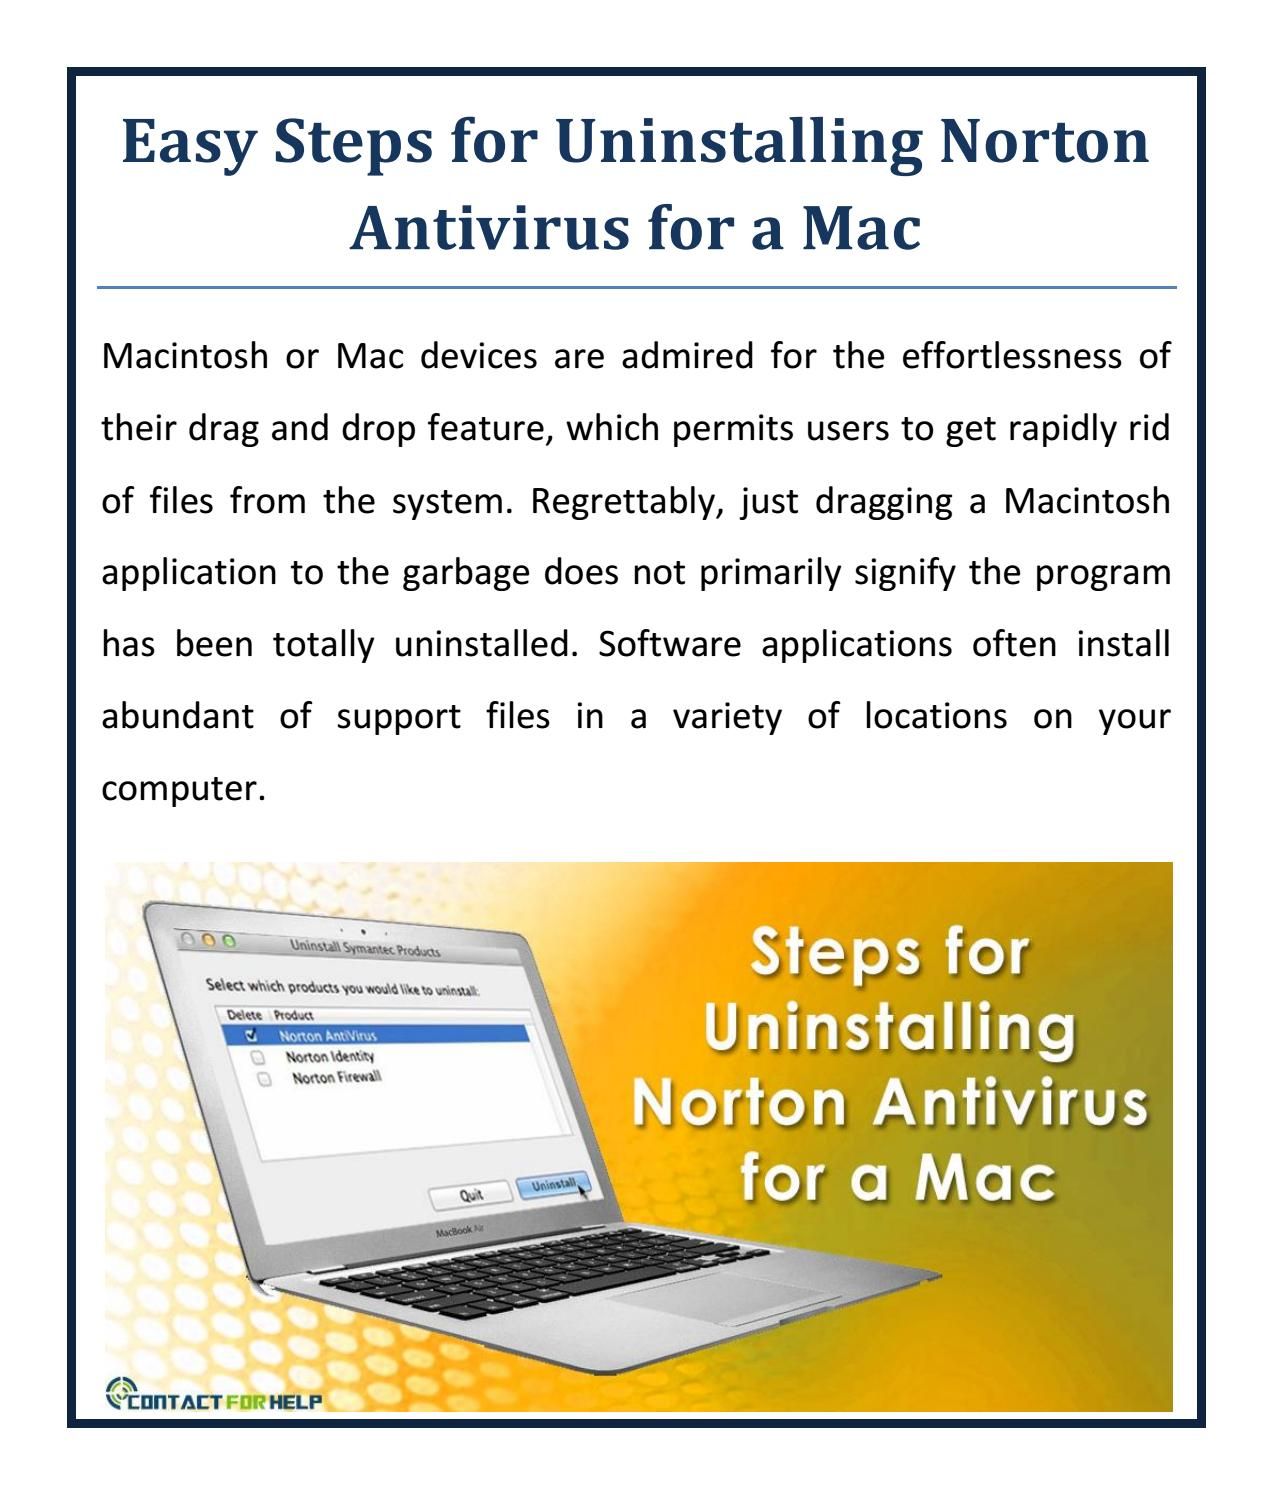 norton antivirus for mac and dropbox